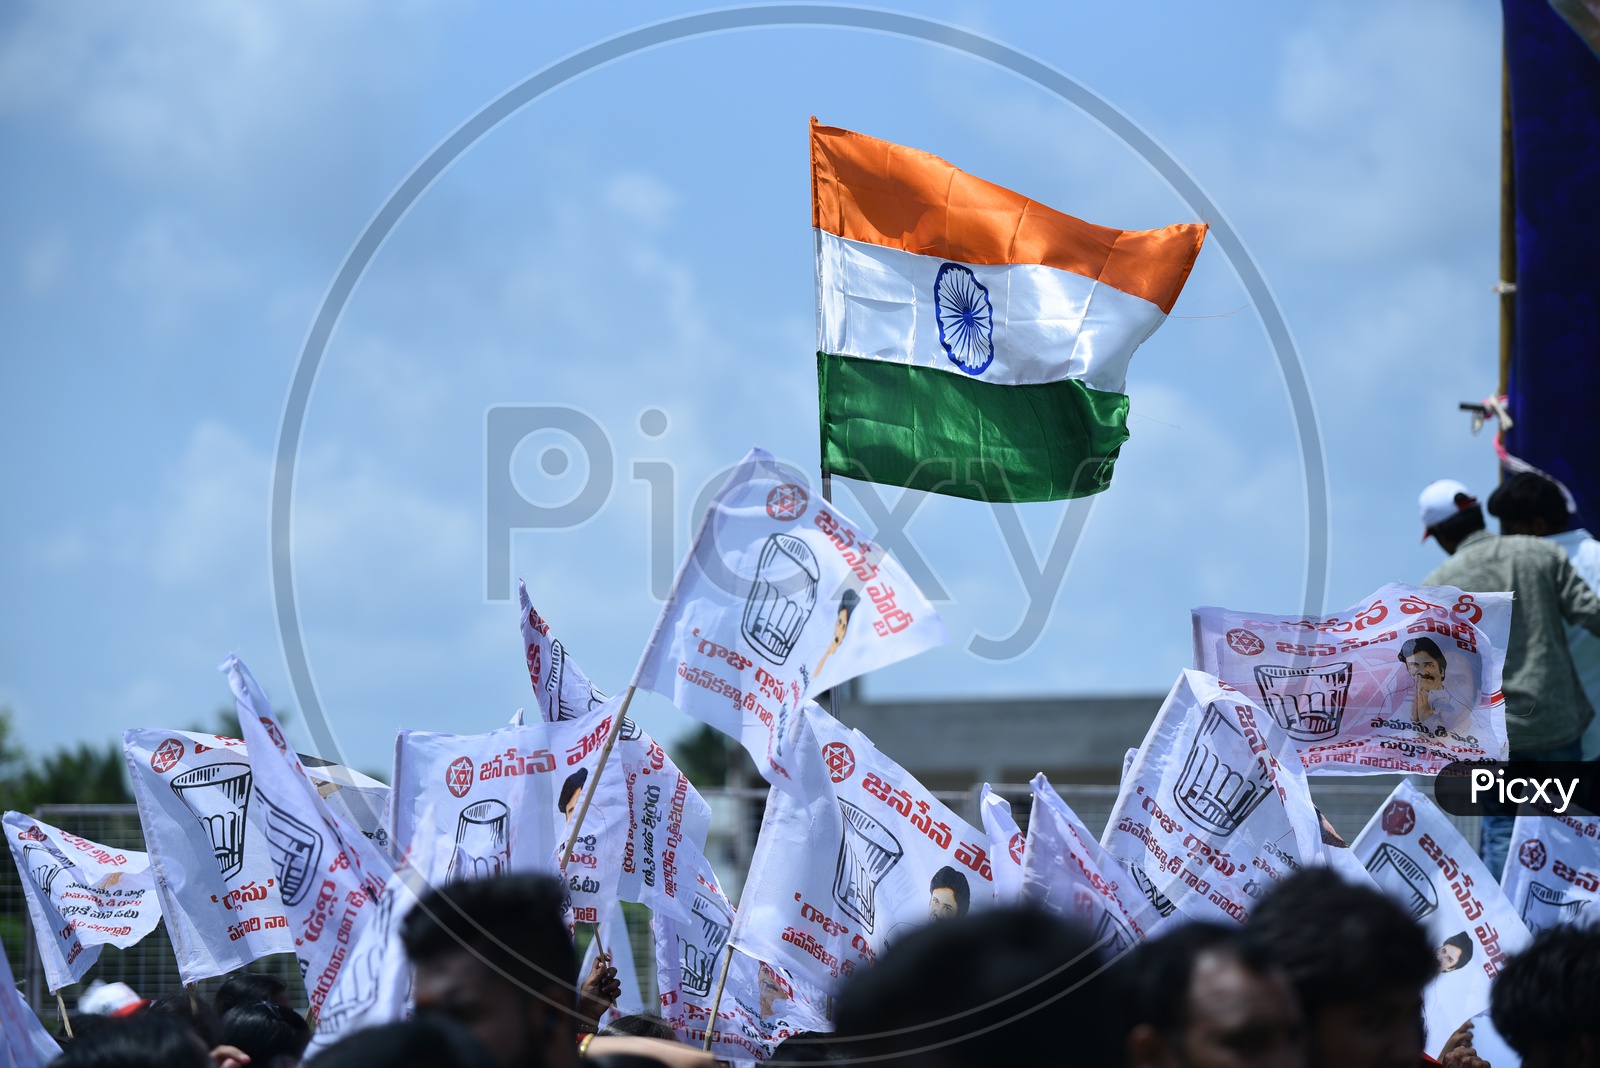 Jana Sena party logo and "Glass tumbler" symbol on flags